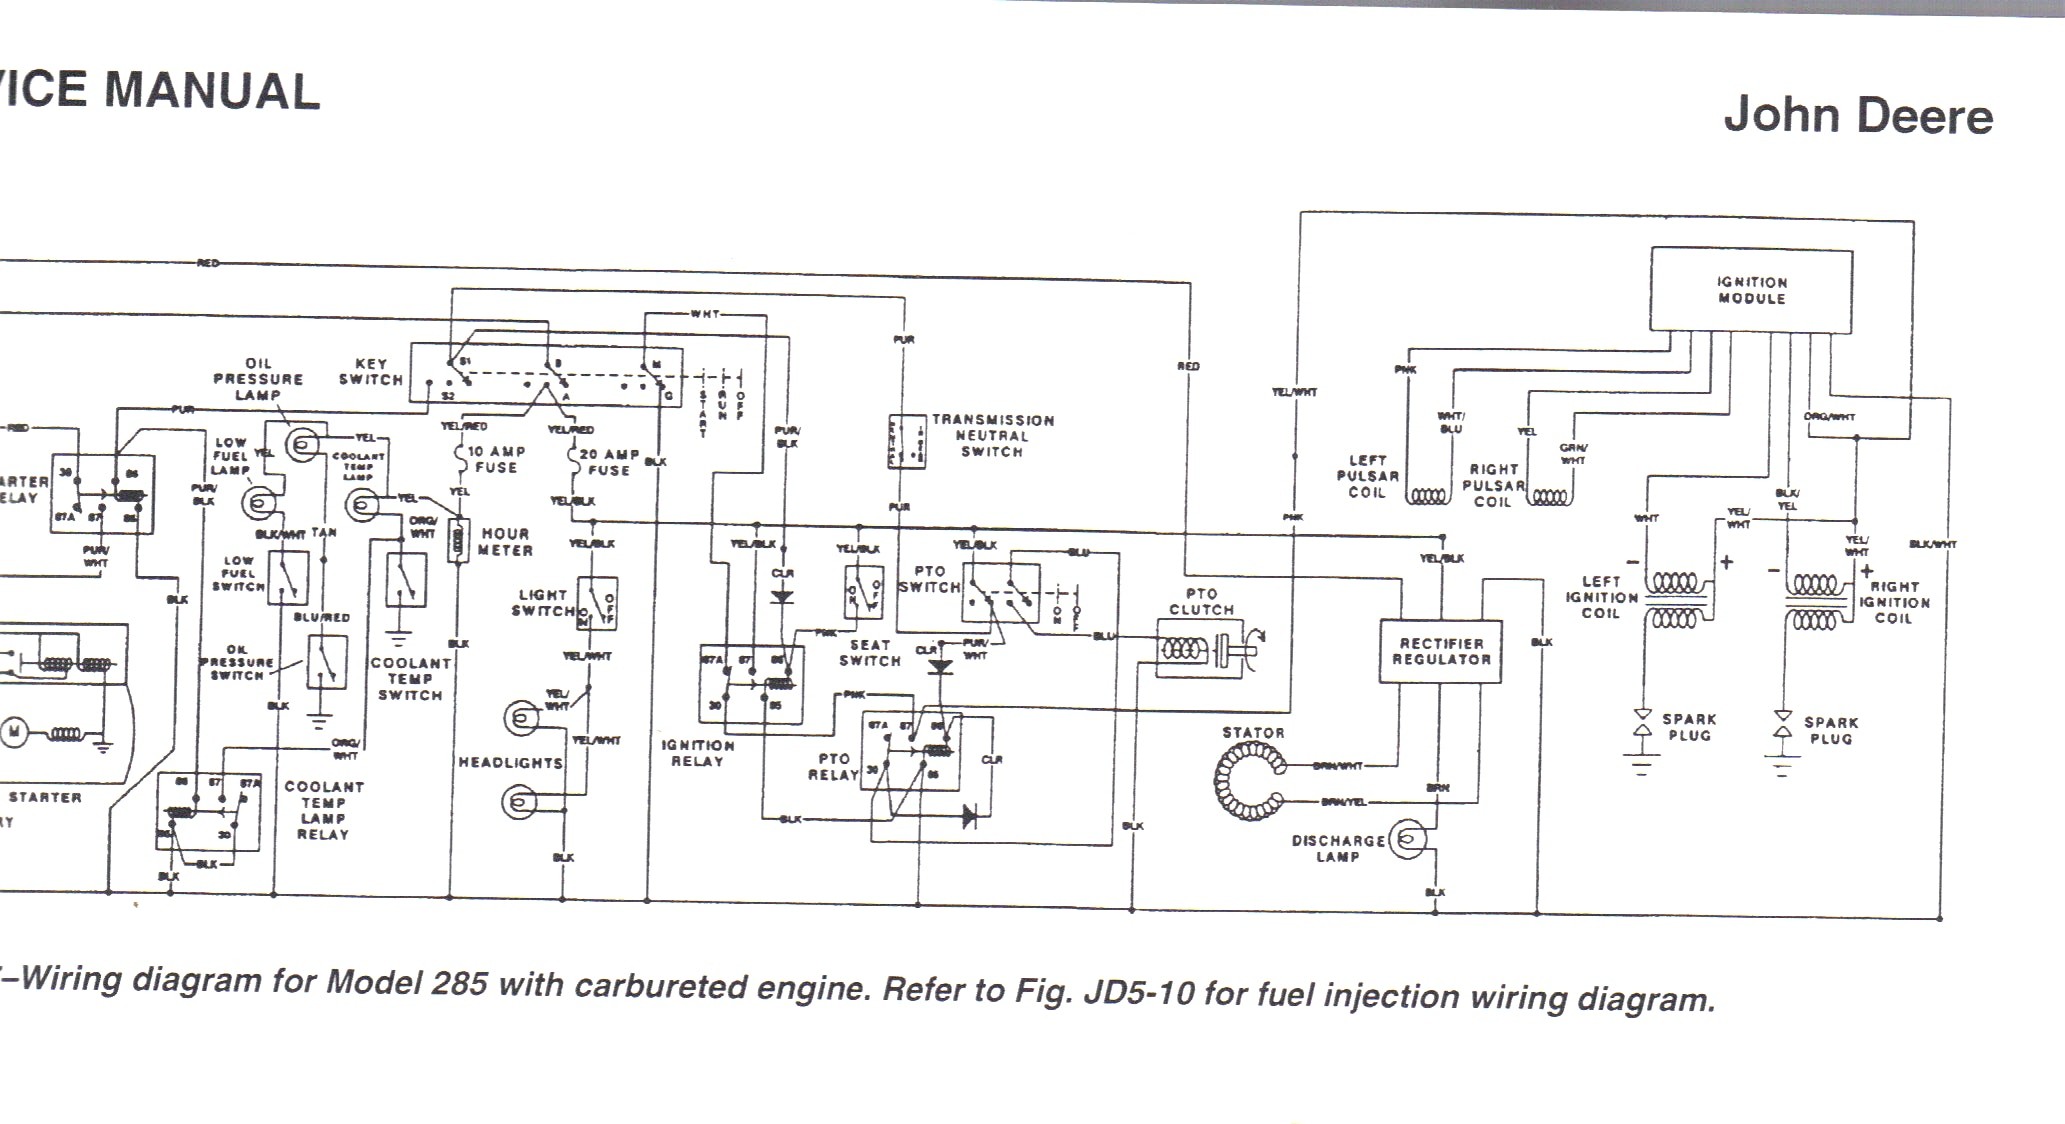 John Deere 1050 Wiring Diagram